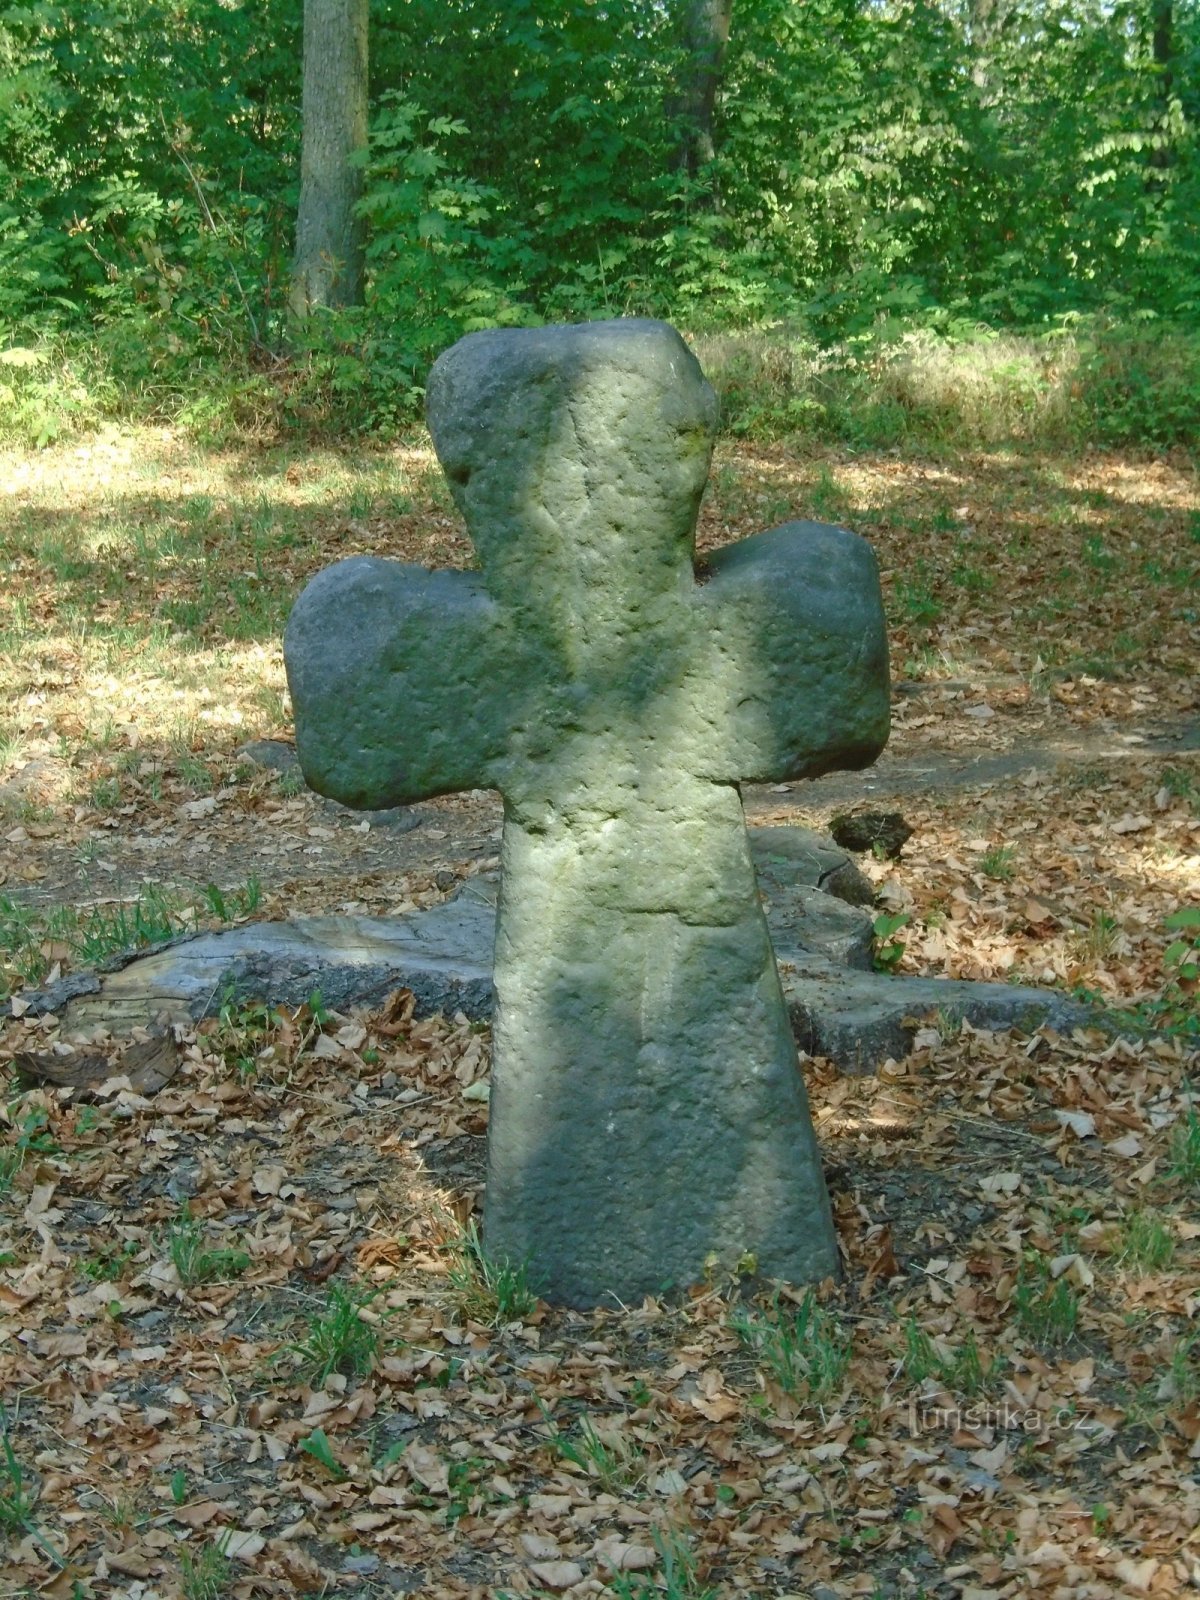 Spravni križ v Masarykovih vrtovih (Josefov, 17.8.2018. XNUMX. XNUMX)